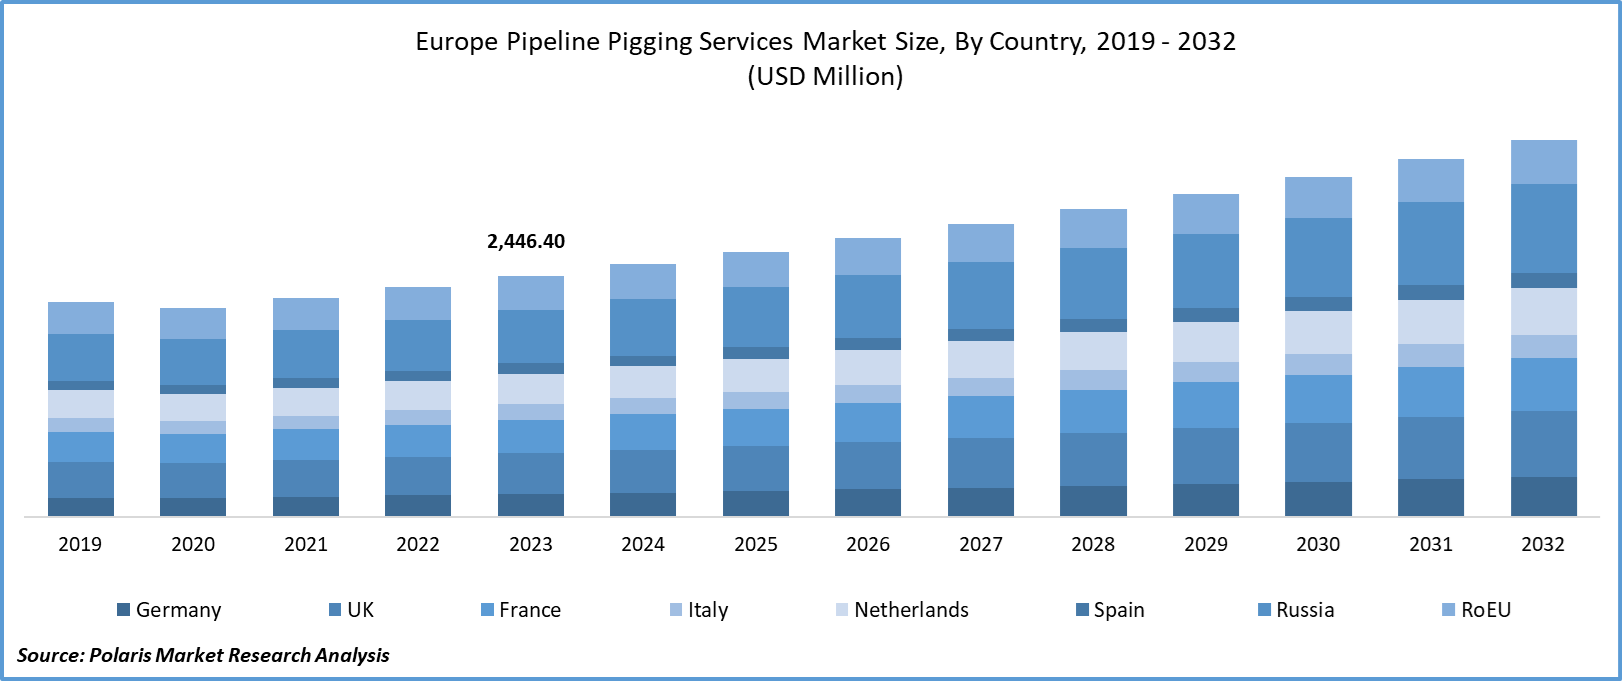 Europe Pipeline Pigging Market Size